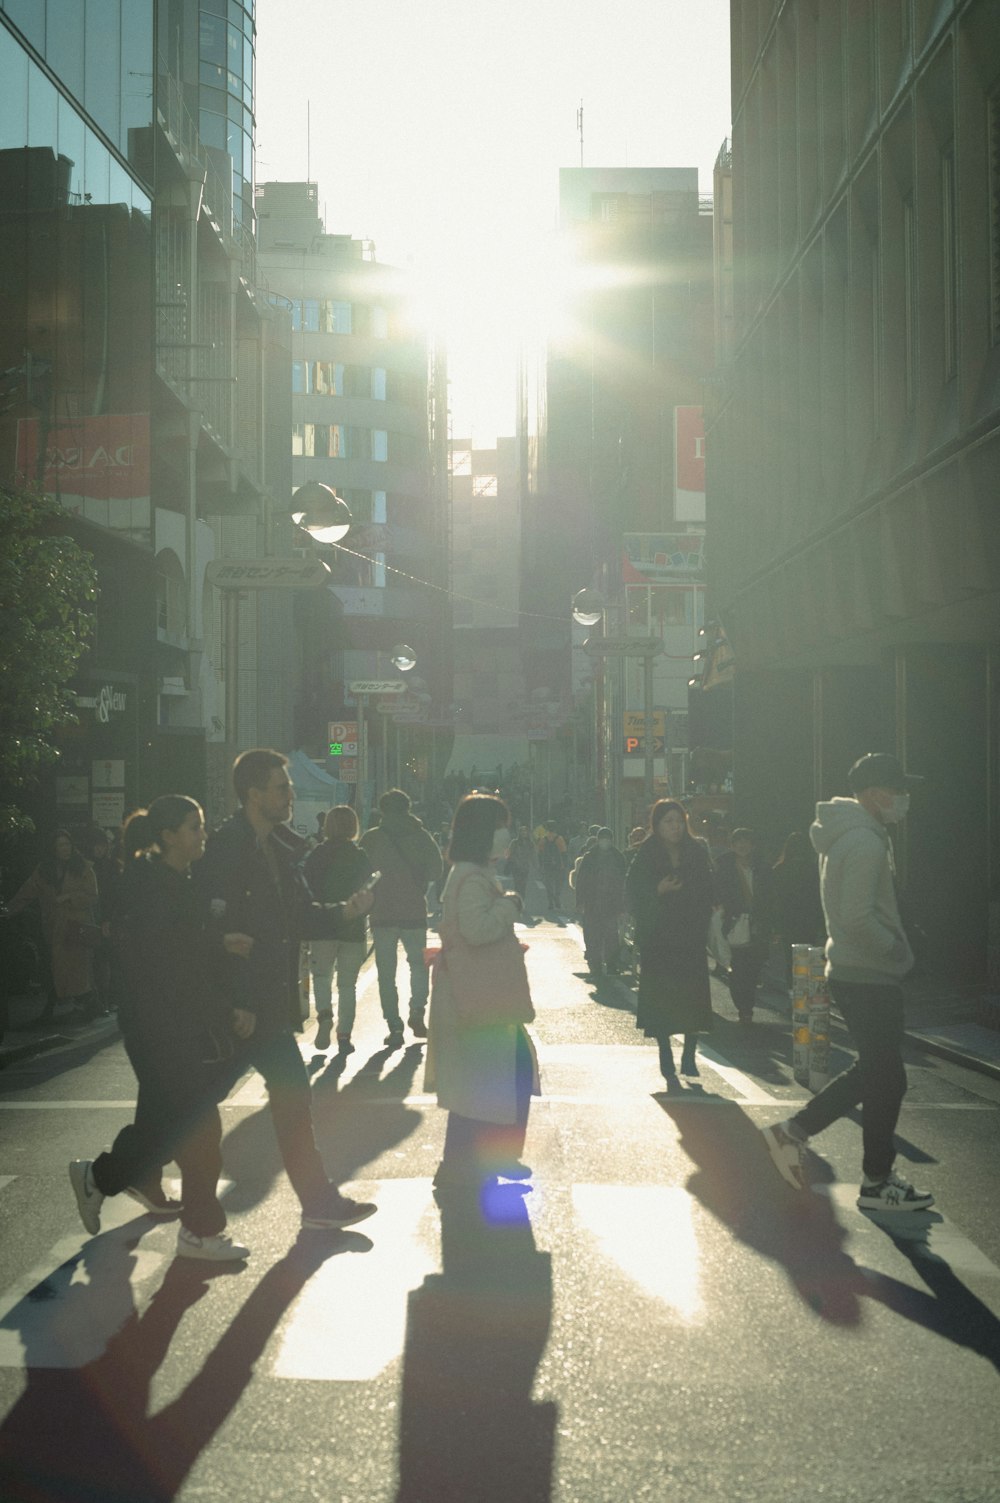 Un grupo de personas caminando por una calle junto a edificios altos